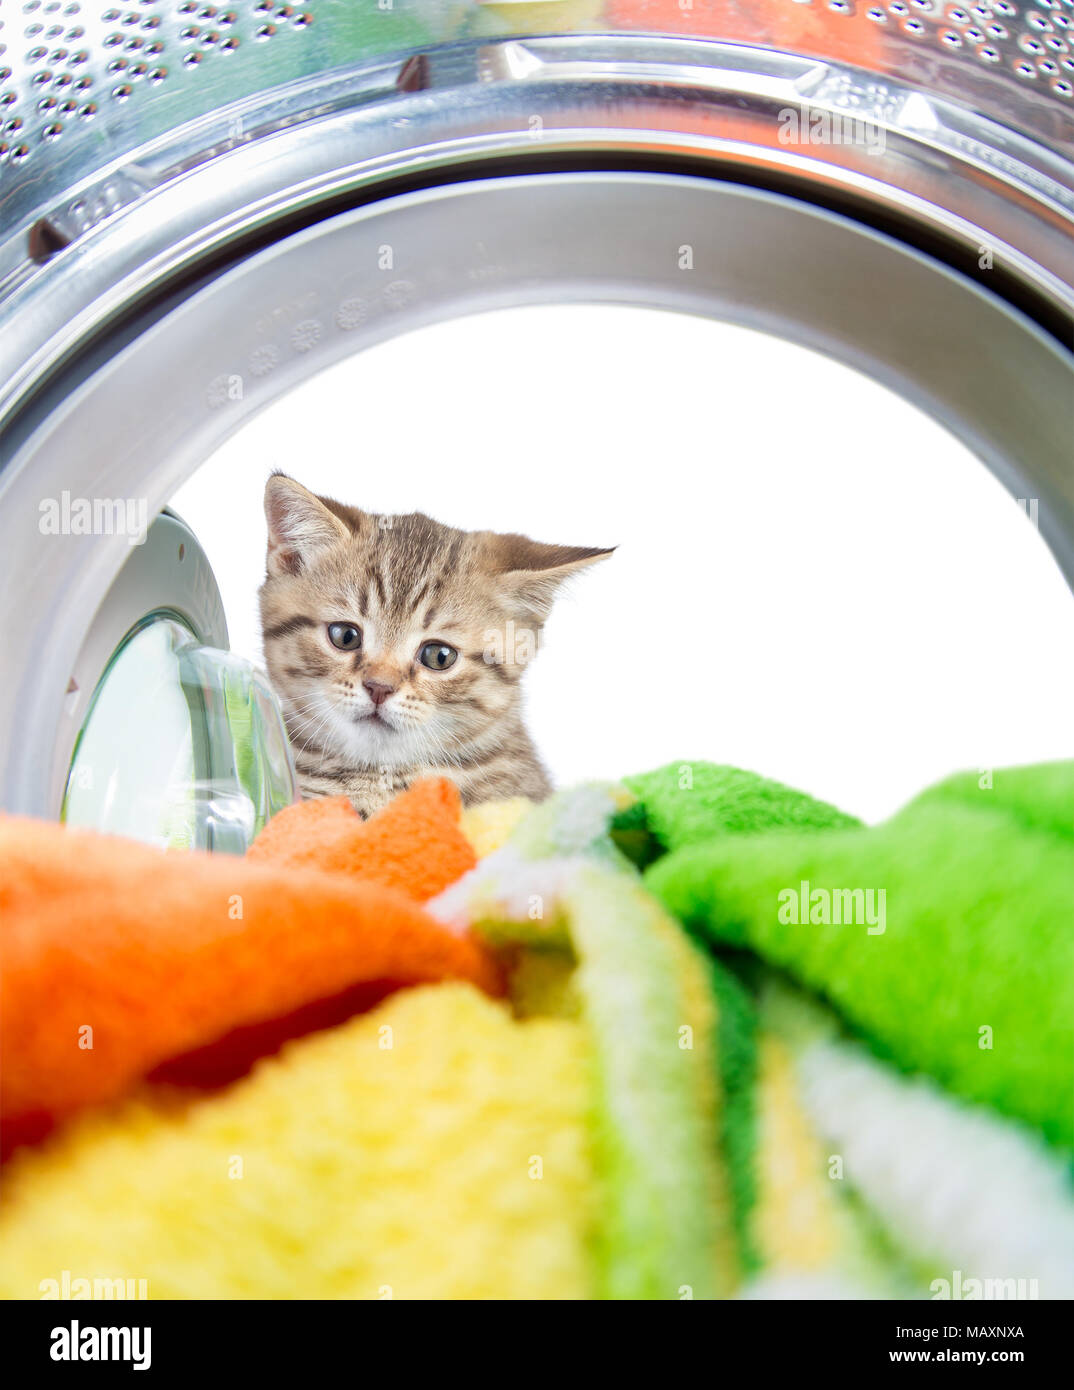 Gato mirando dentro de lavar la máquina con interés Foto de stock